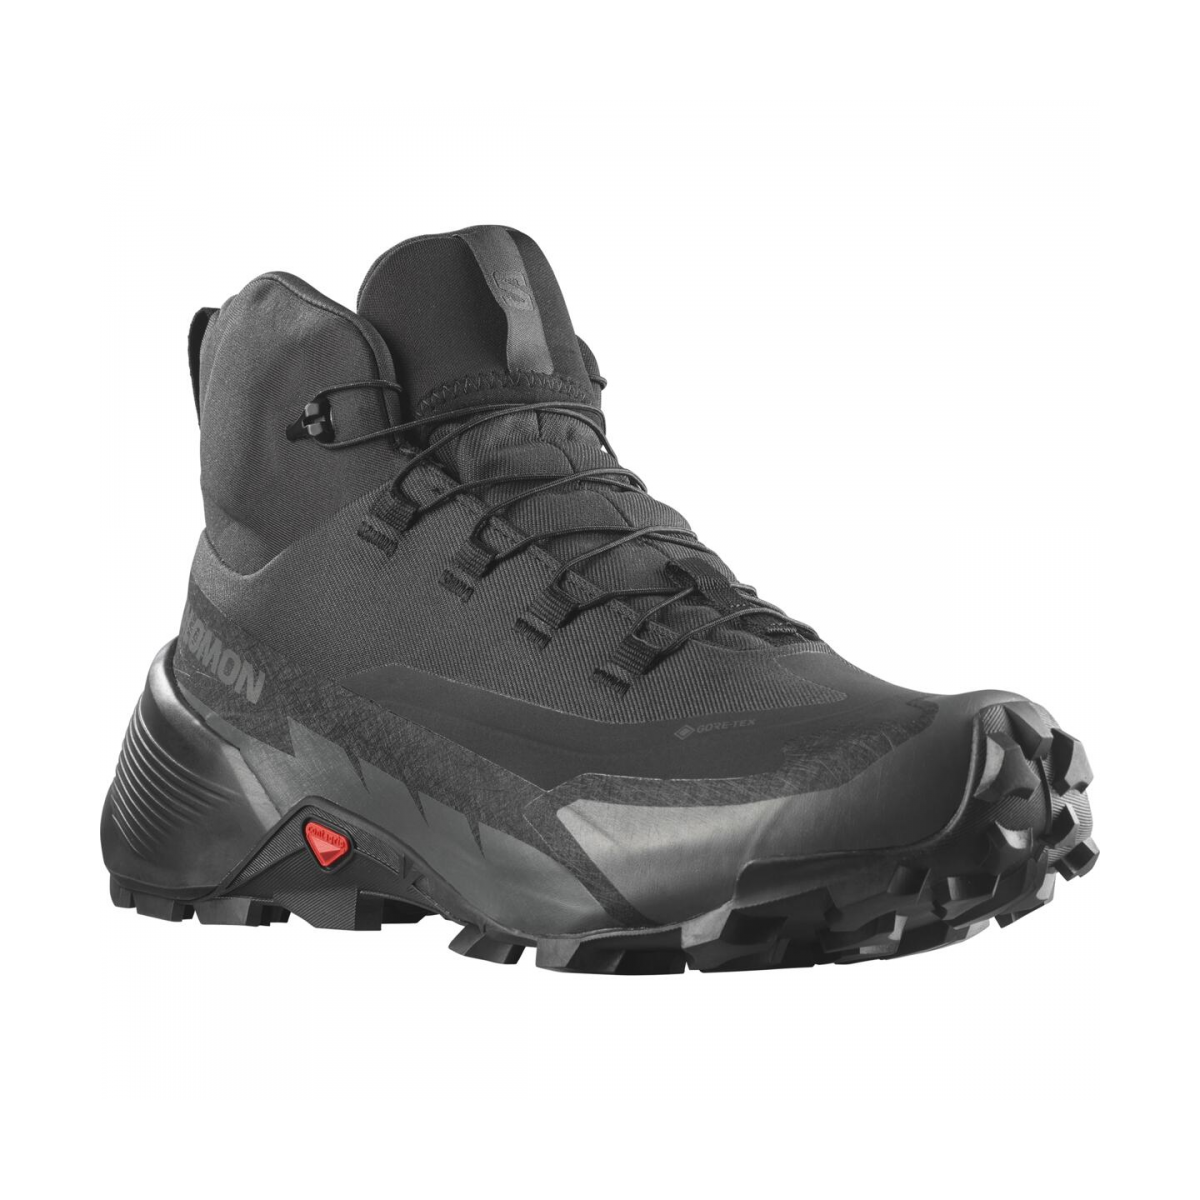 SALOMON CROSS HIKE MID GTX 2 hiking boots - black